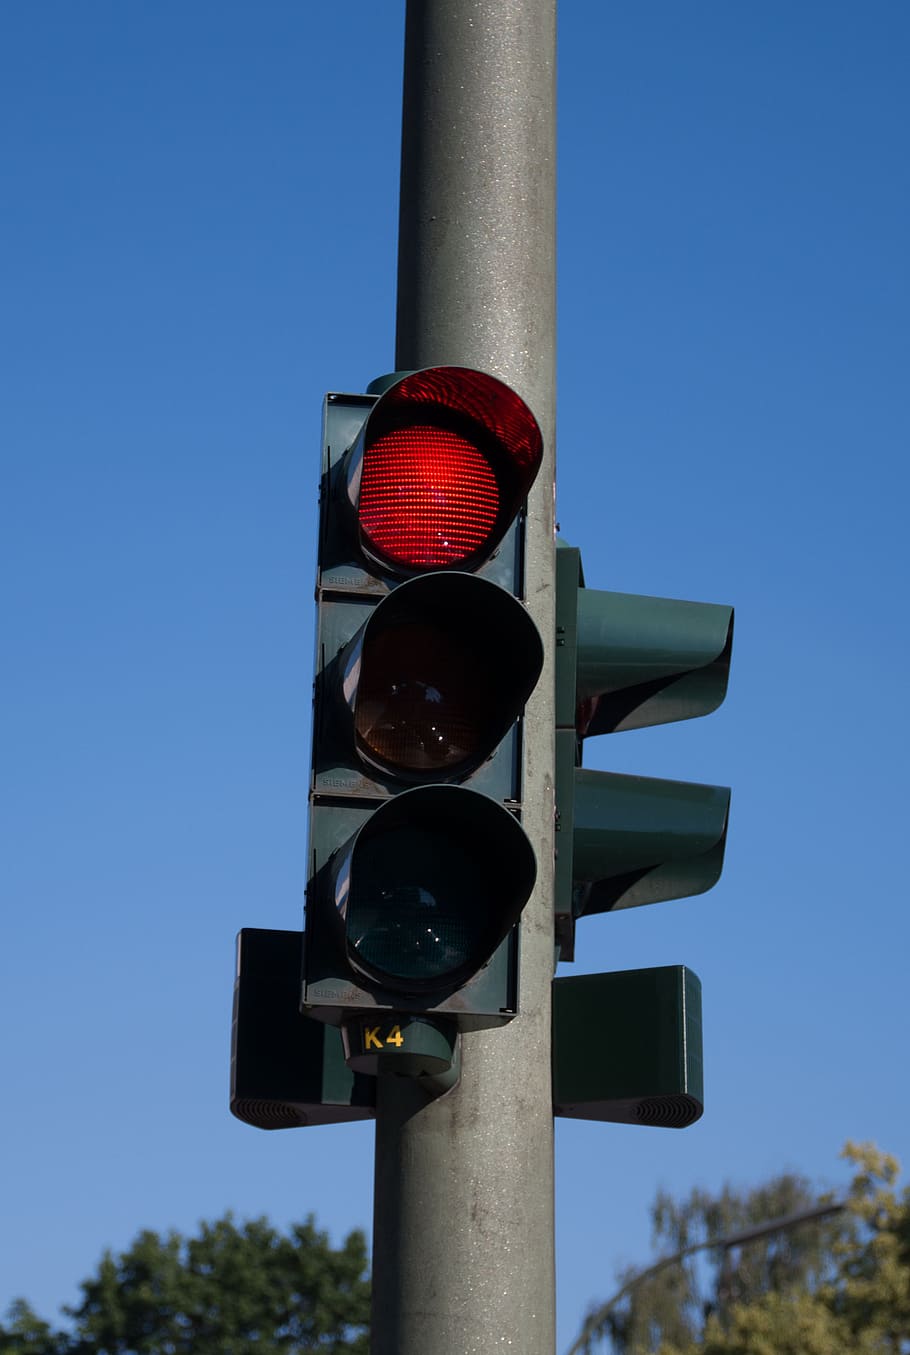 semaphore, traffic lights, stop, lamp, caution, red light, traffic control, HD wallpaper